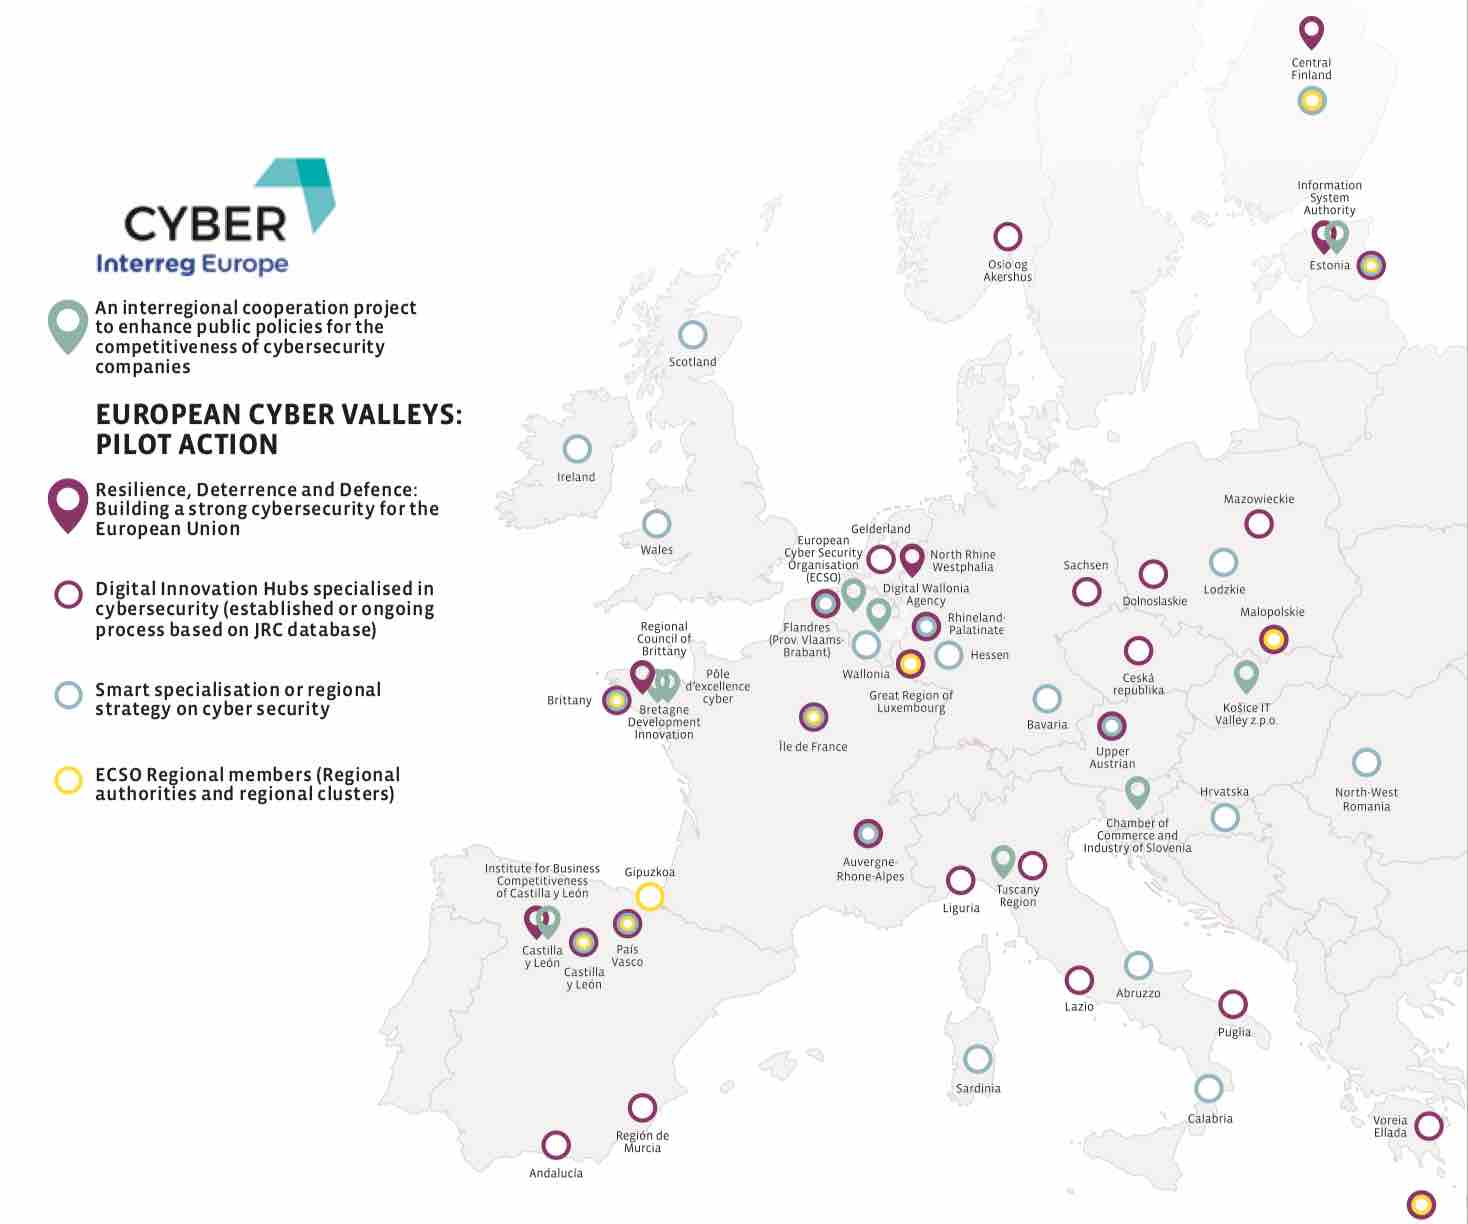 Carte-Cyber-Valleys-Europe-projet-Cyber-Interreg.jpg